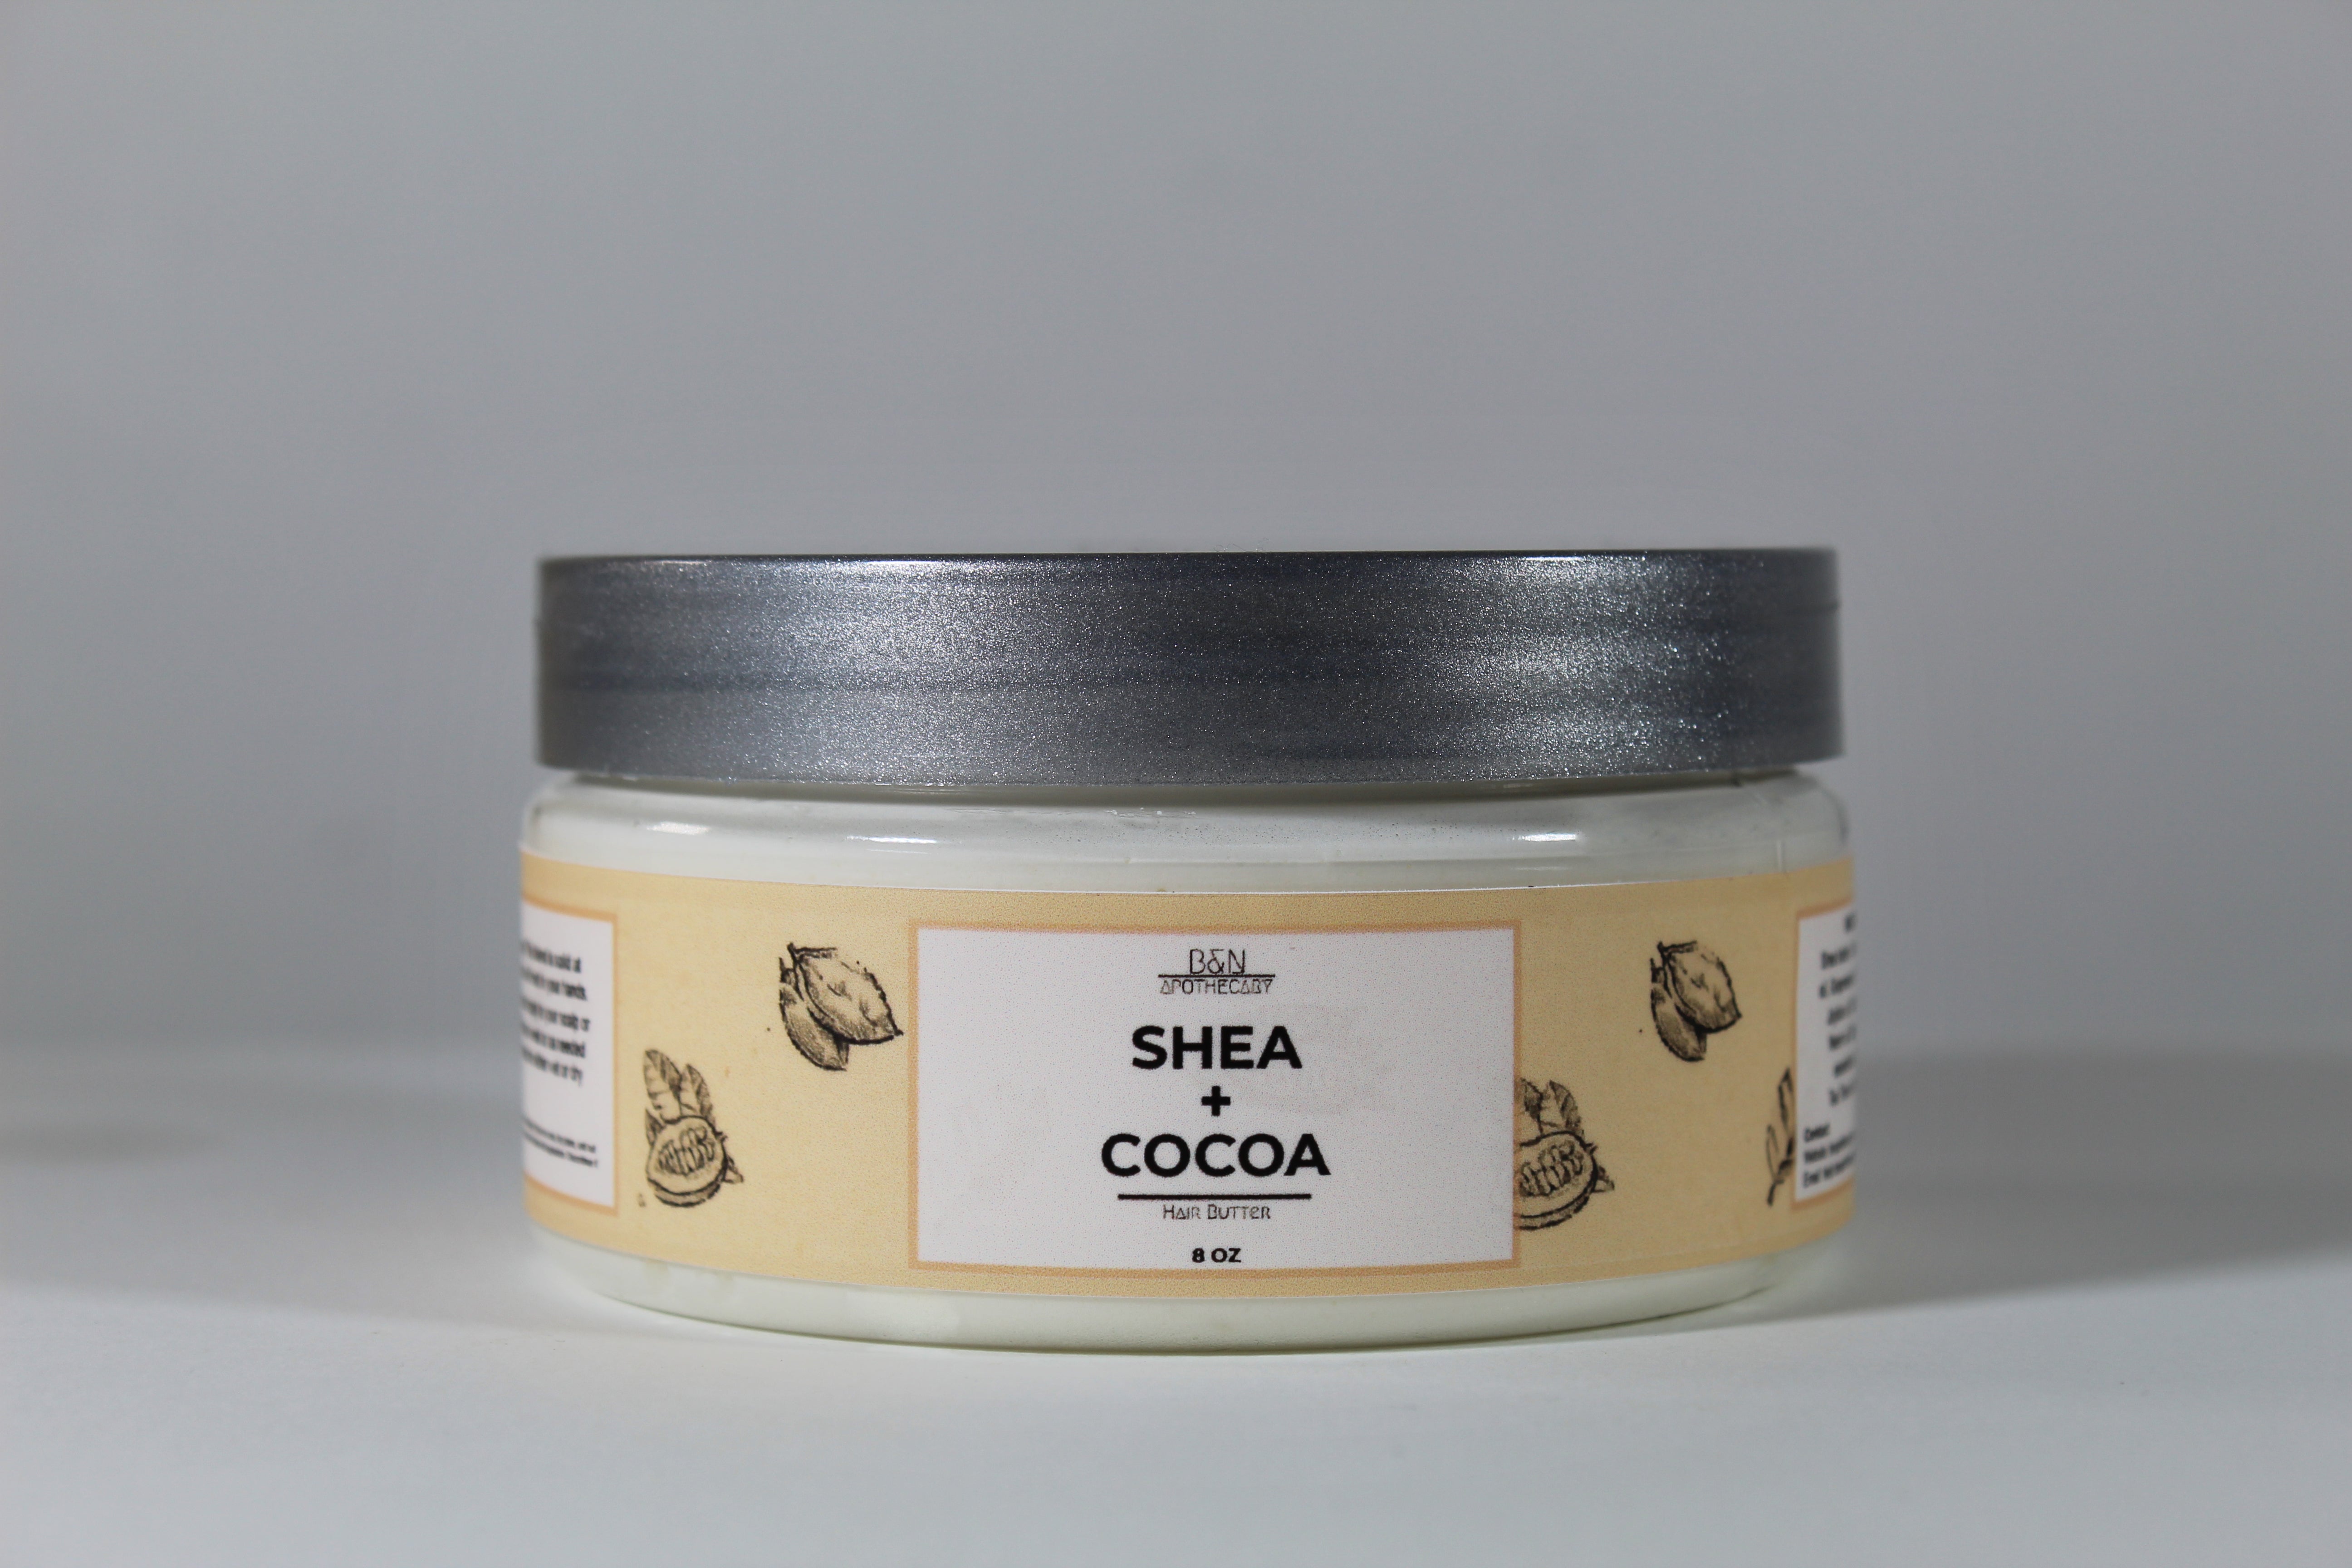 Shea + Cocoa Hair Butter